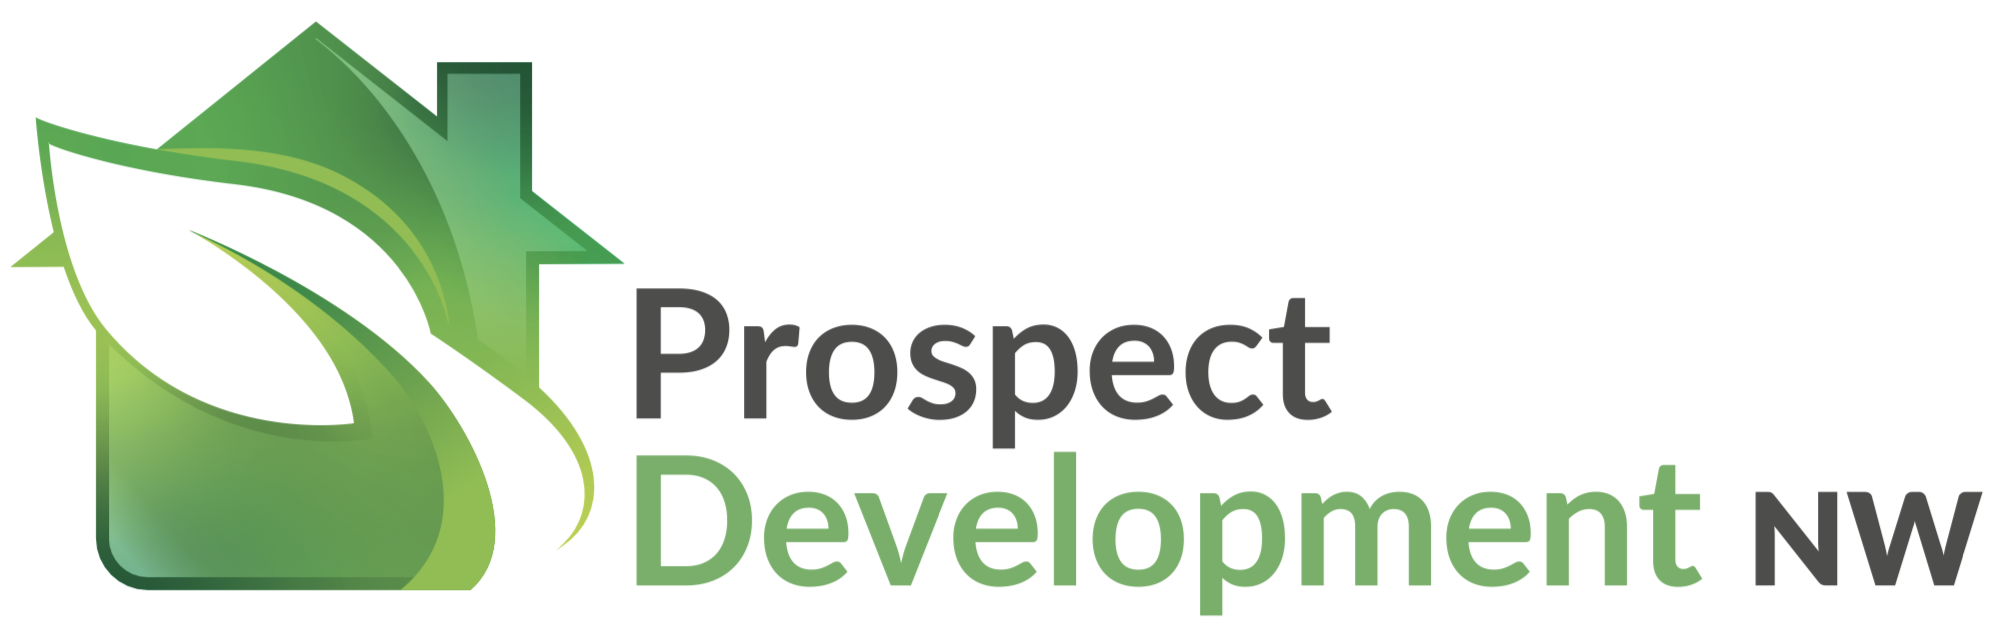 Prospect Development NW